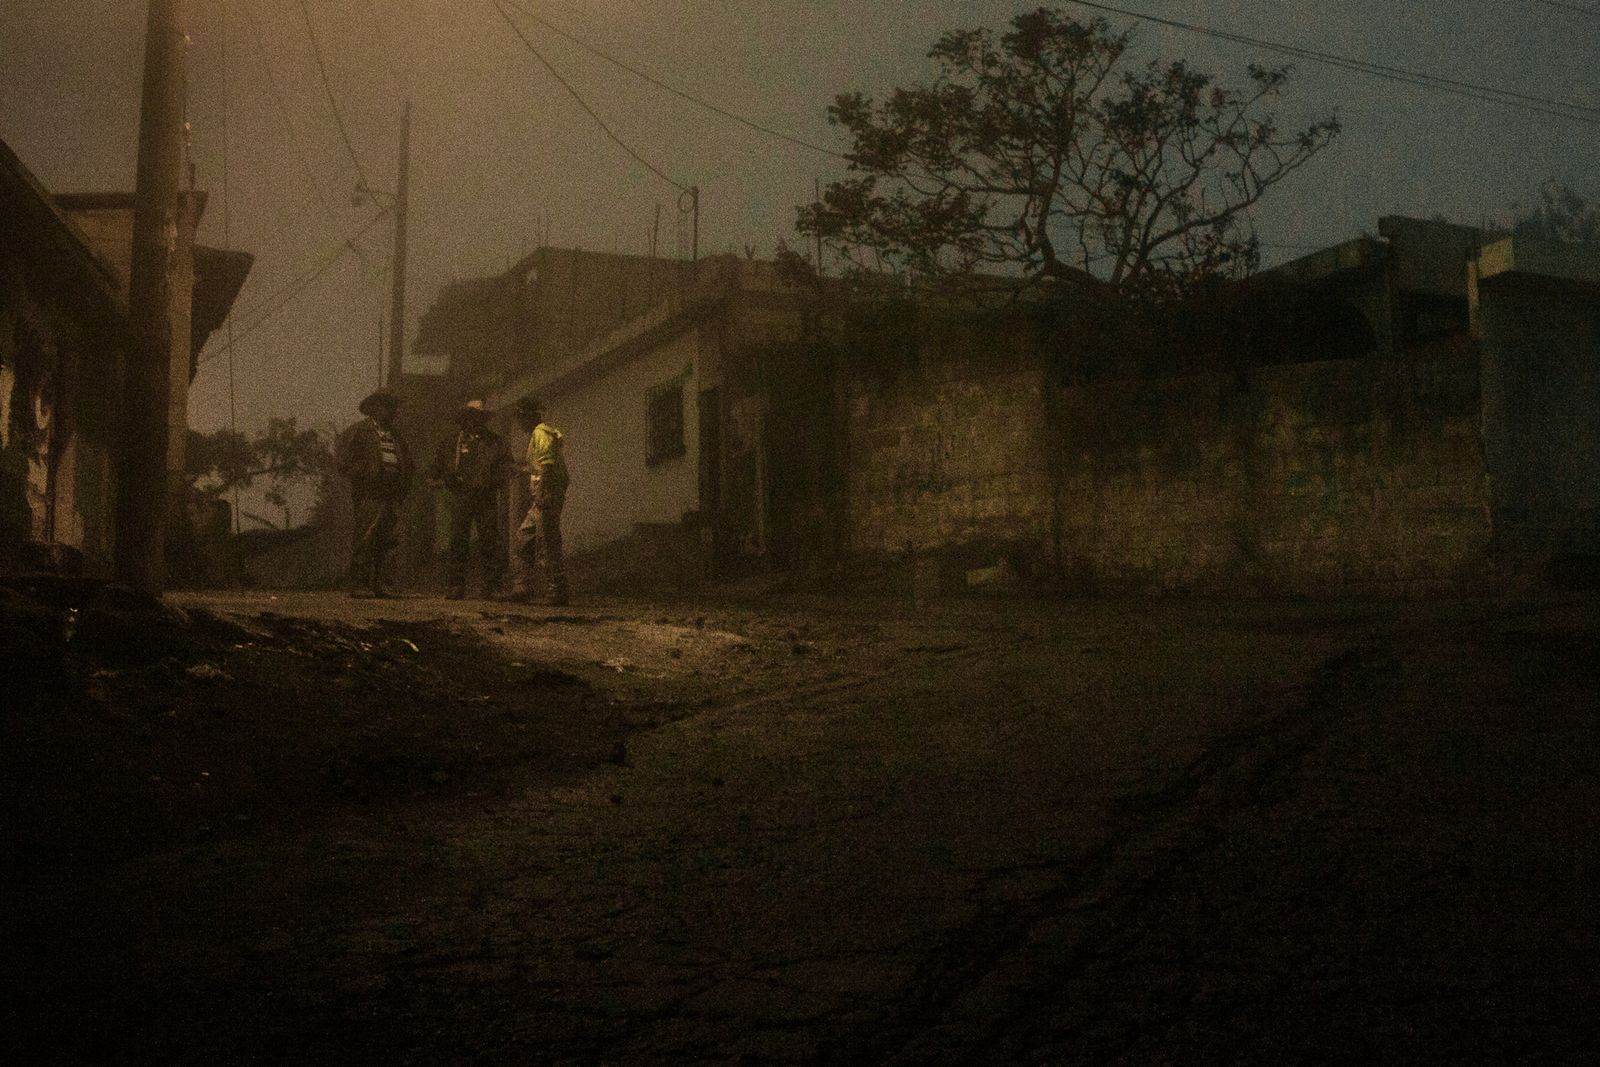 © Celine Croze - Men talking before enter to the speakeasy. Patrocinio, Guatemala, 2015.